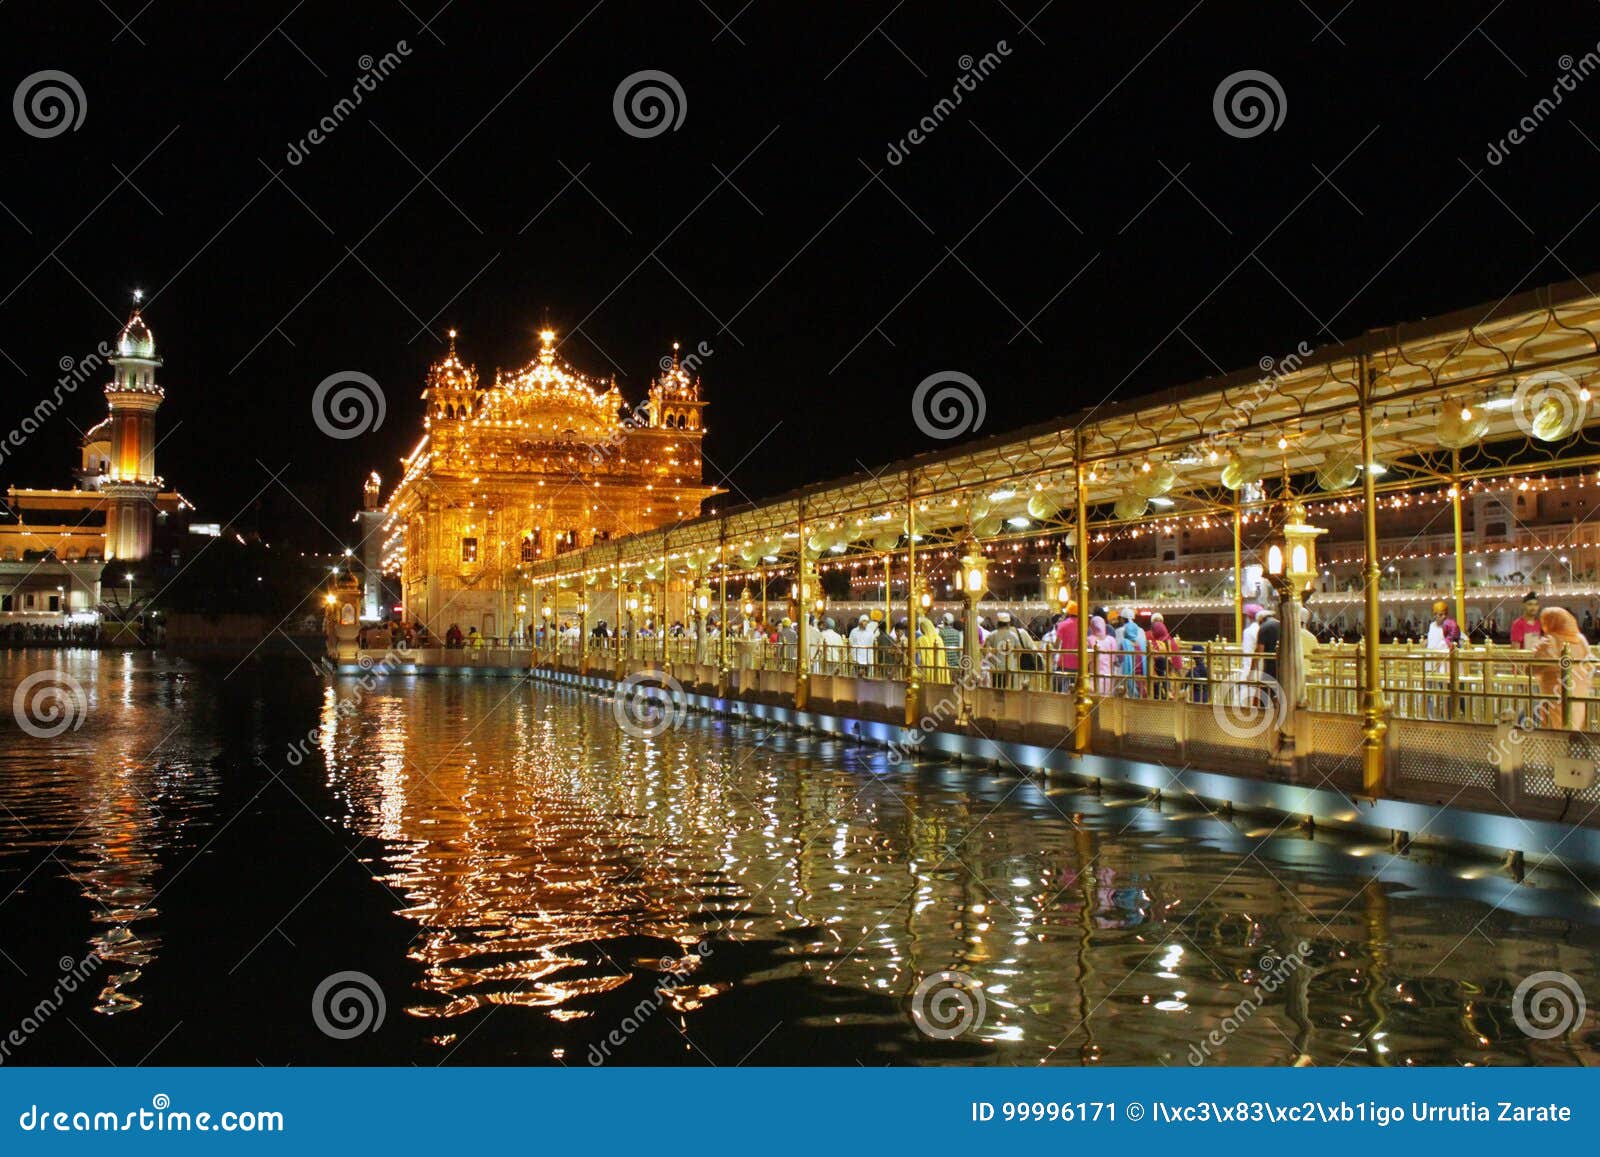 india, goldem temple. amritsar